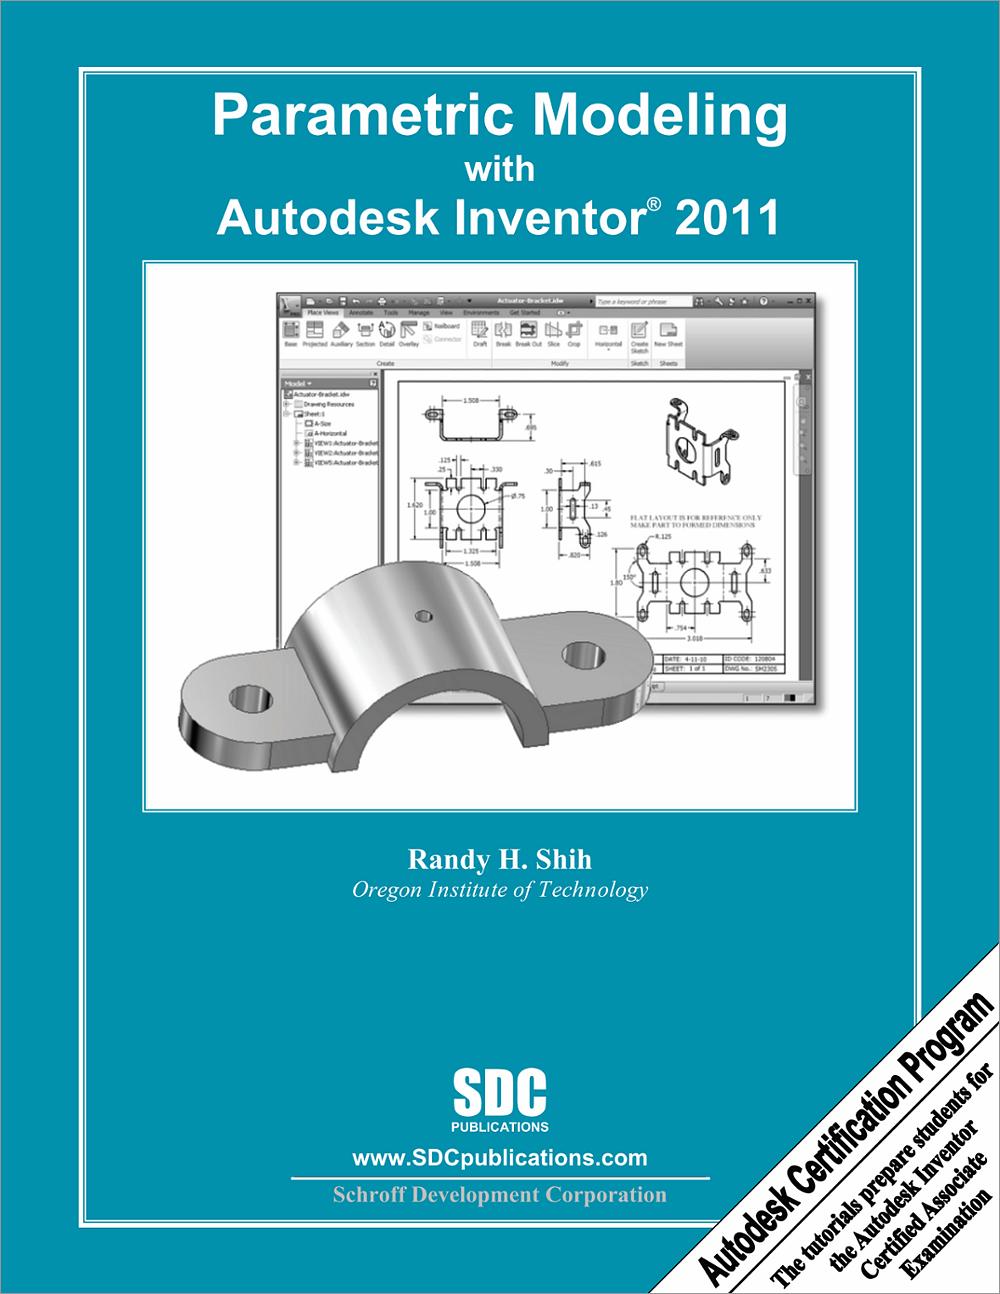 autodesk graphic manual